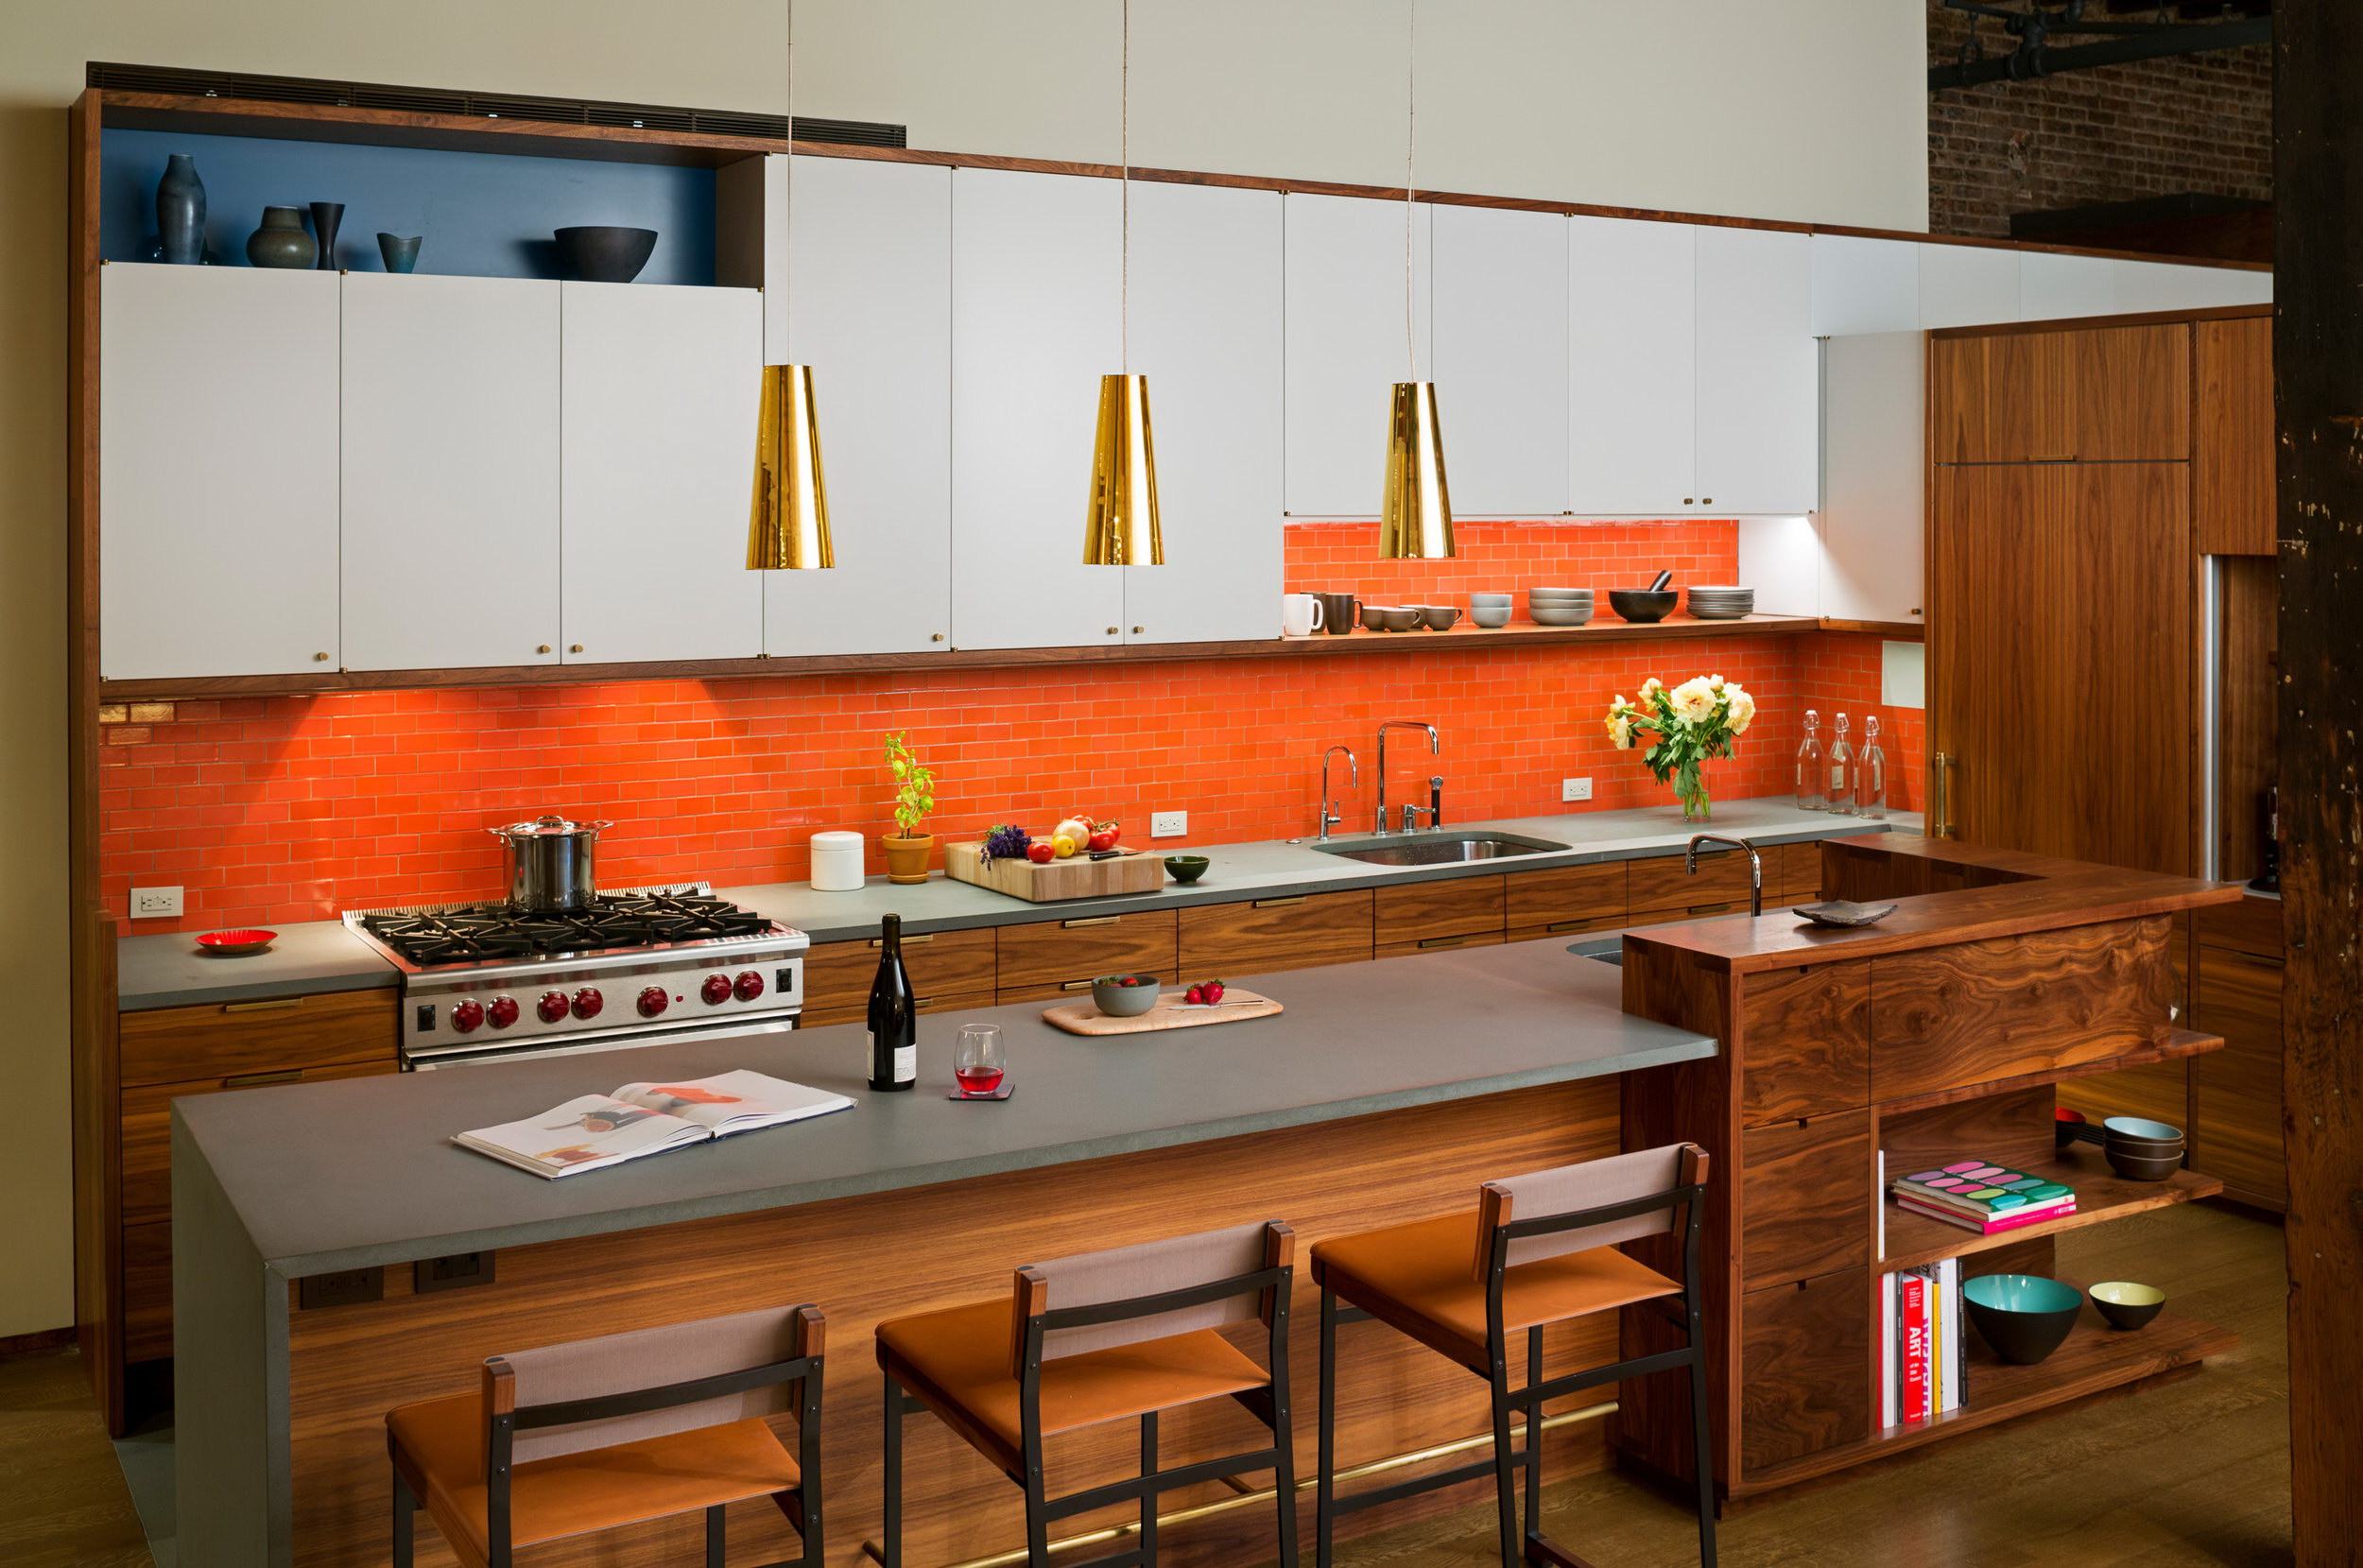 Оранжевый фартук. Кухня в оранжевом стиле. Кухня в стиле лофт. Кухня терракотового цвета. Оранжевая кухня в интерьере.